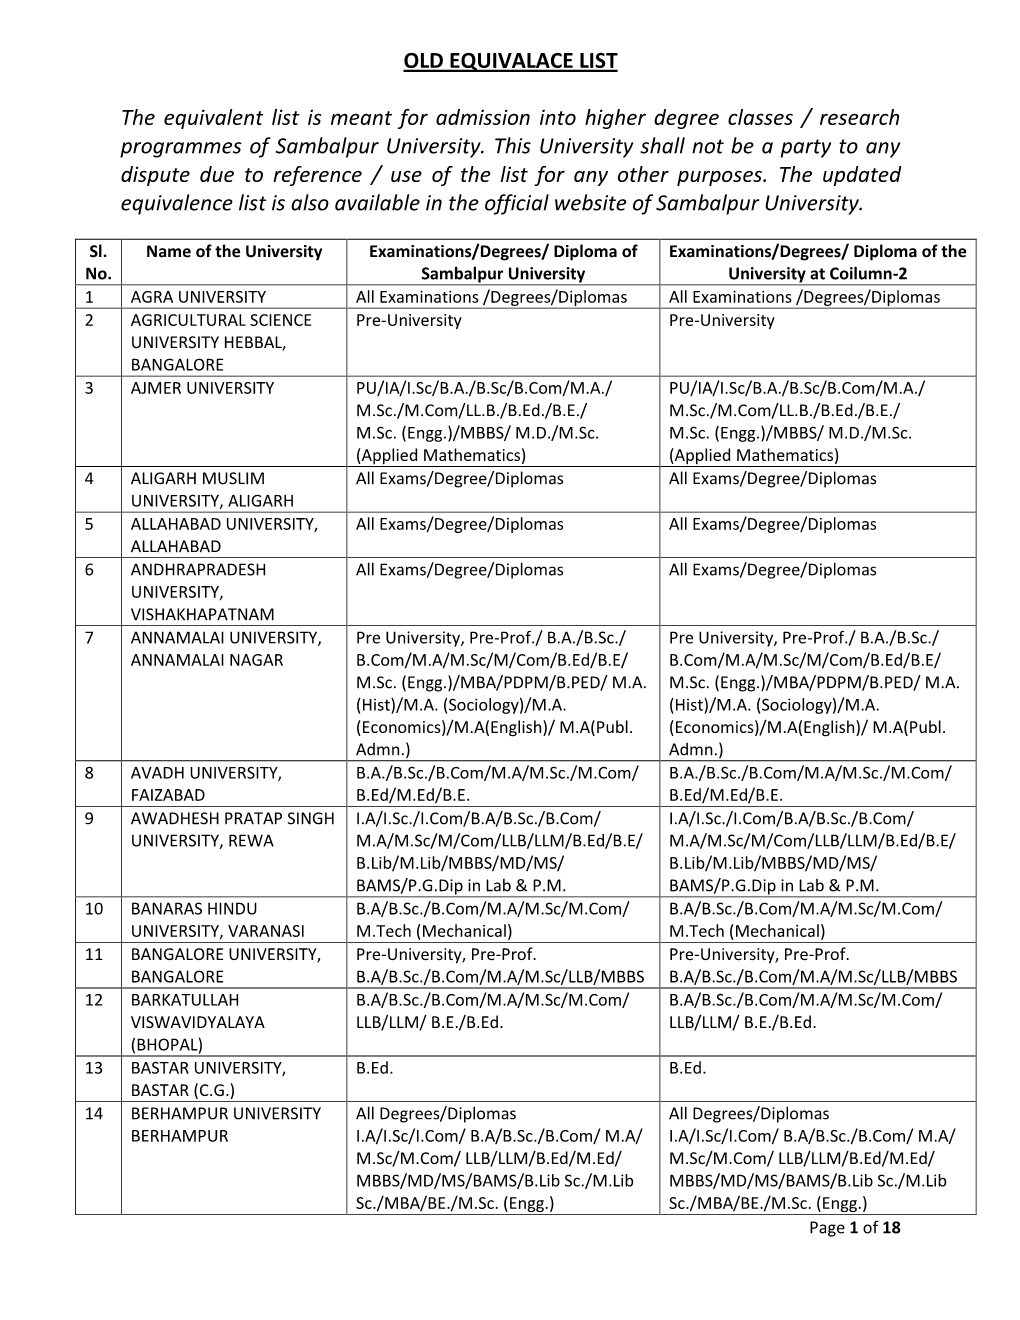 Old Equivalence List,Sambalpur University